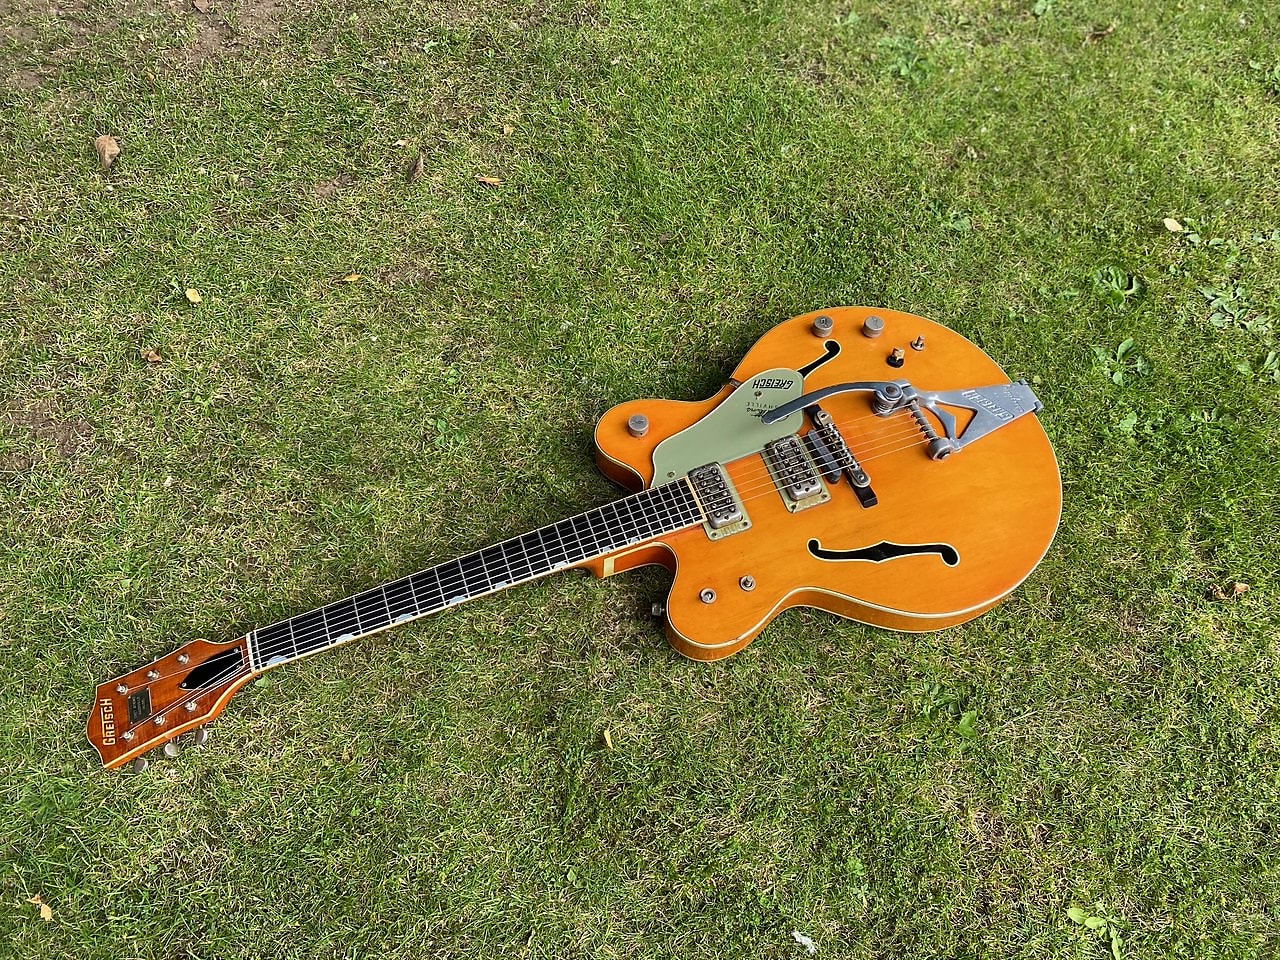 Gretsch 6120 Nashville 1965 Orange Stain Guitar For Sale Denmark Street